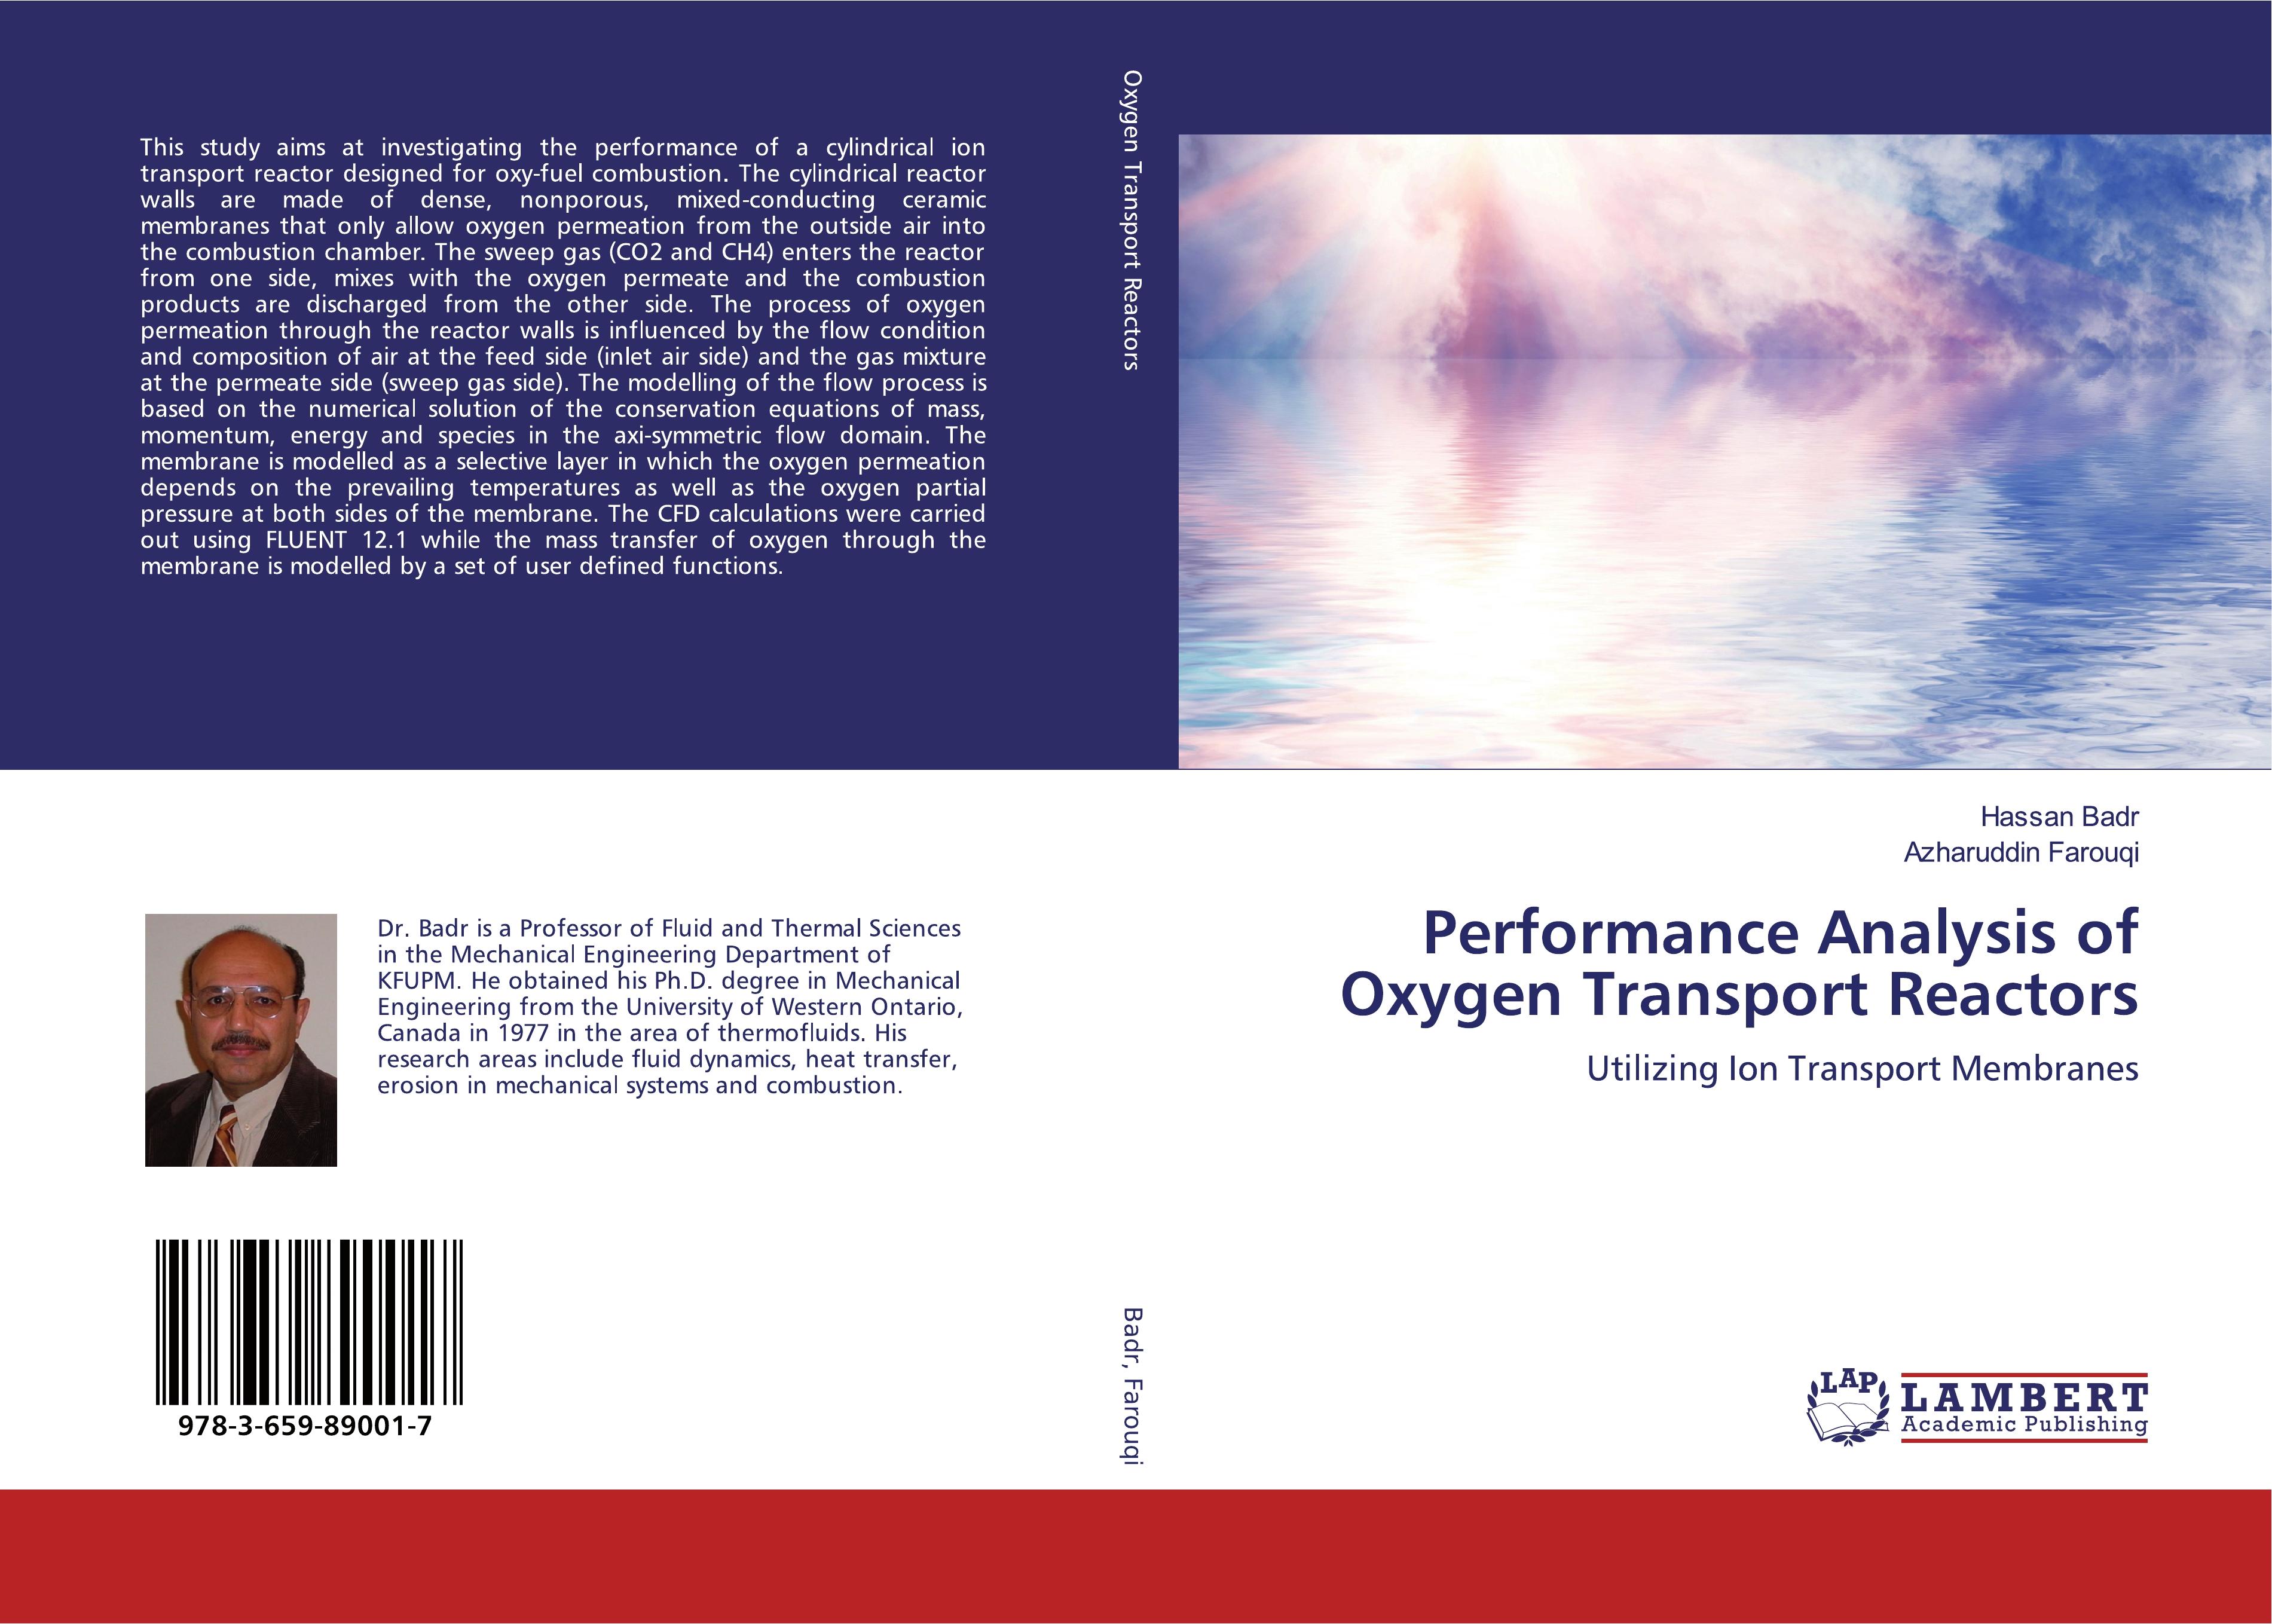 Performance Analysis of Oxygen Transport Reactors - Hassan Badr Azharuddin Farouqi